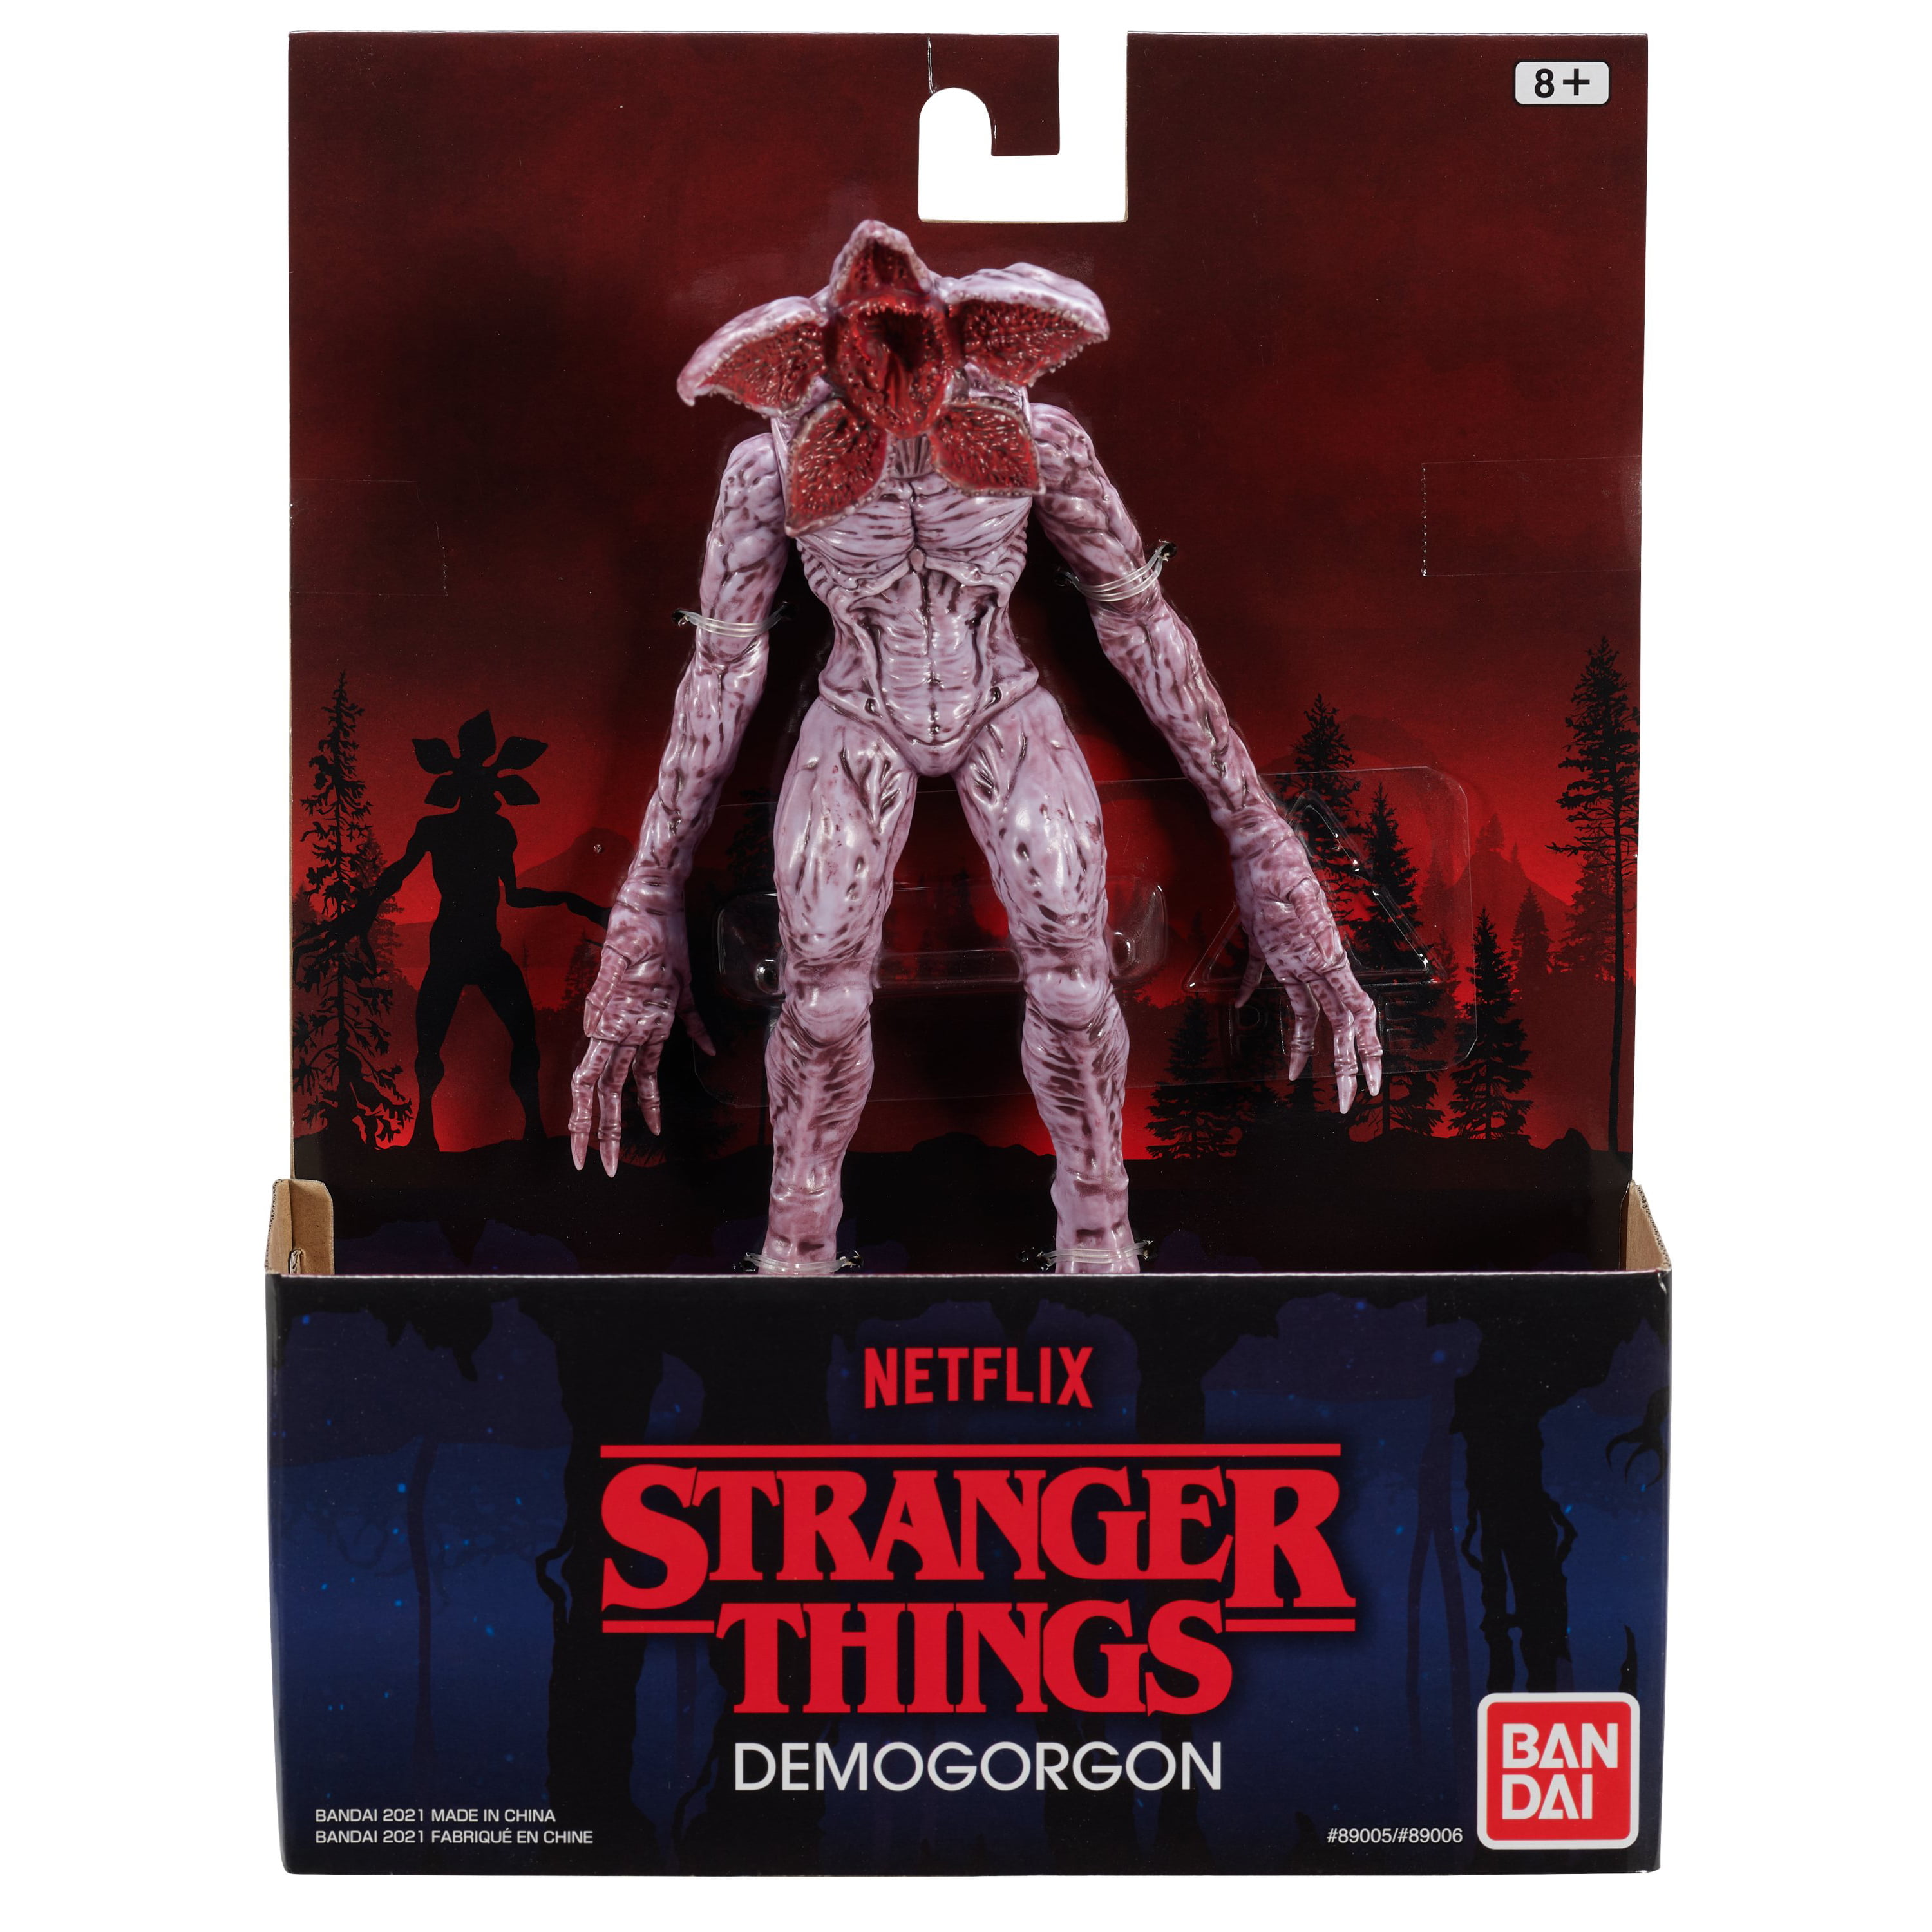 Halloween PSA: Walmart's selling a life-size 'Stranger Things' Demogorgon